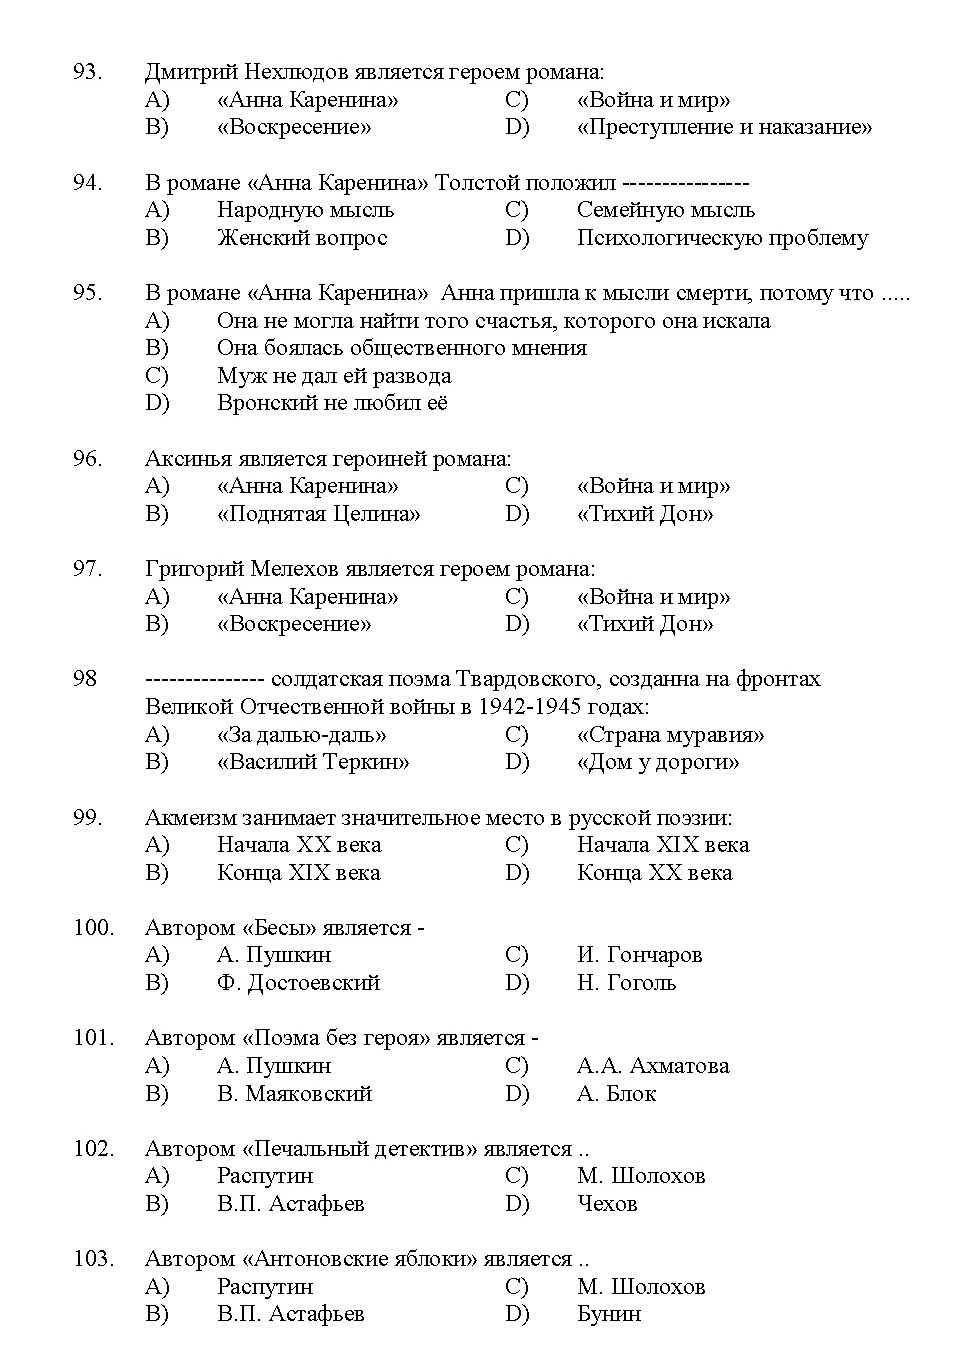 Kerala SET Russian Exam 2011 Question Code 91127 9